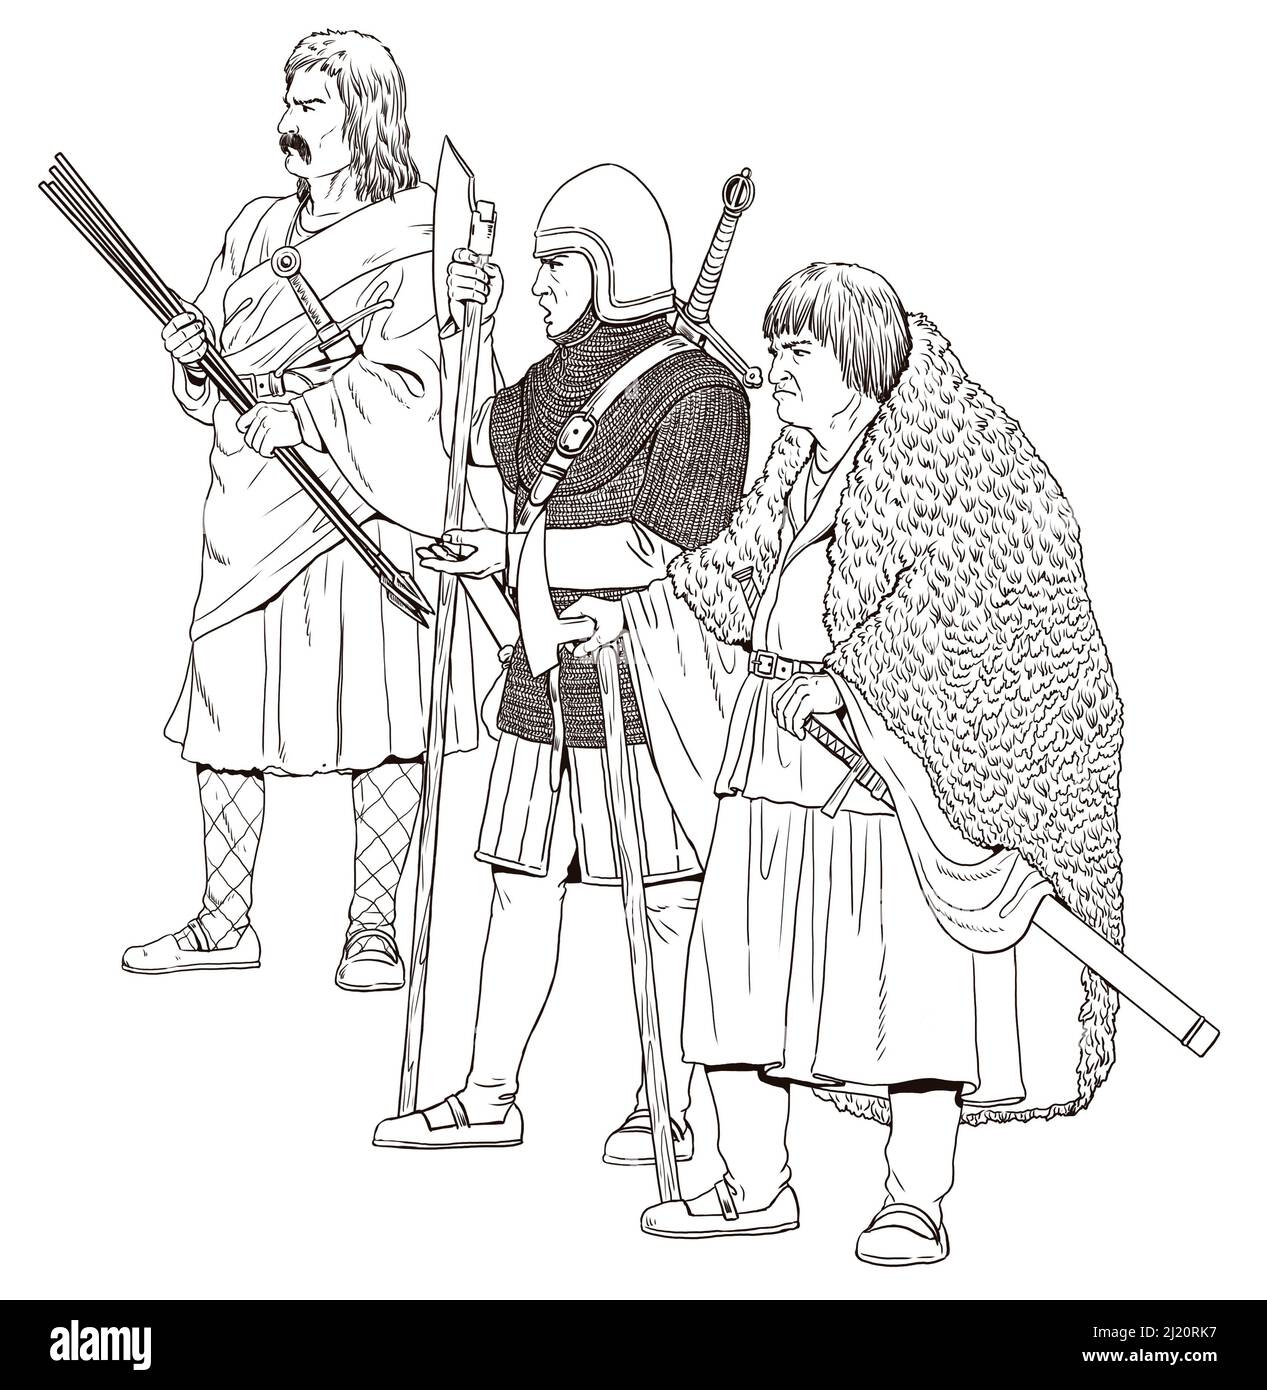 Irish warrior gallowglass. Elite mercenary warriors. Medieval knight illustration. Stock Photo